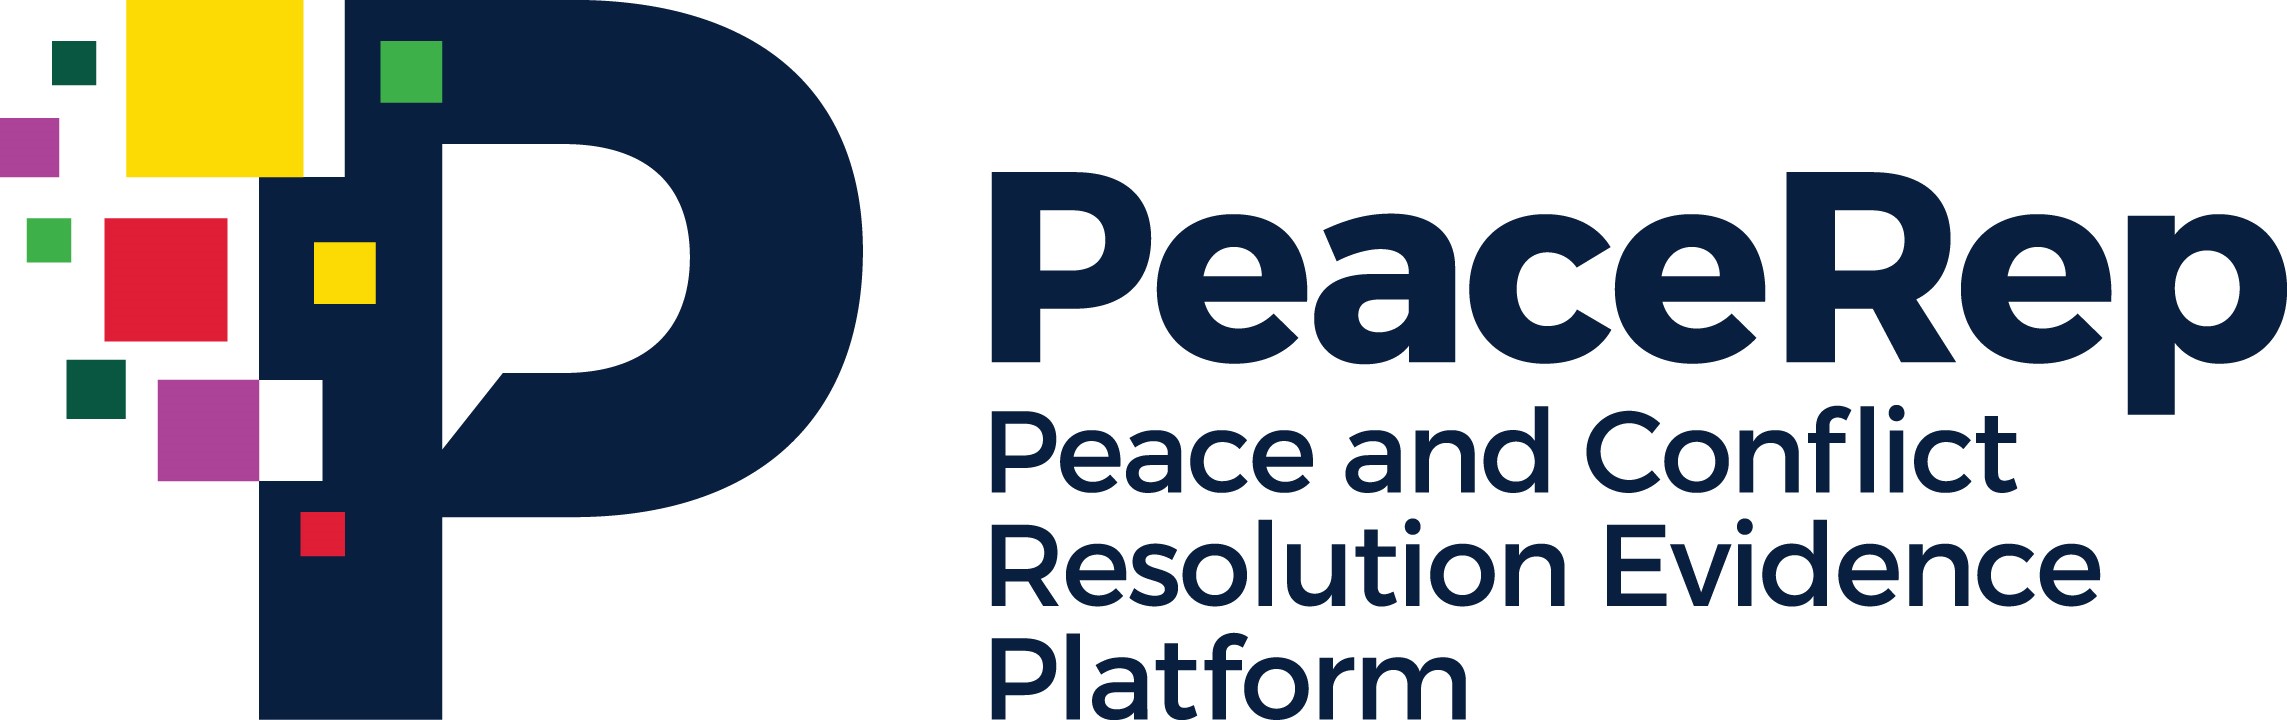 PeaceRep Logo